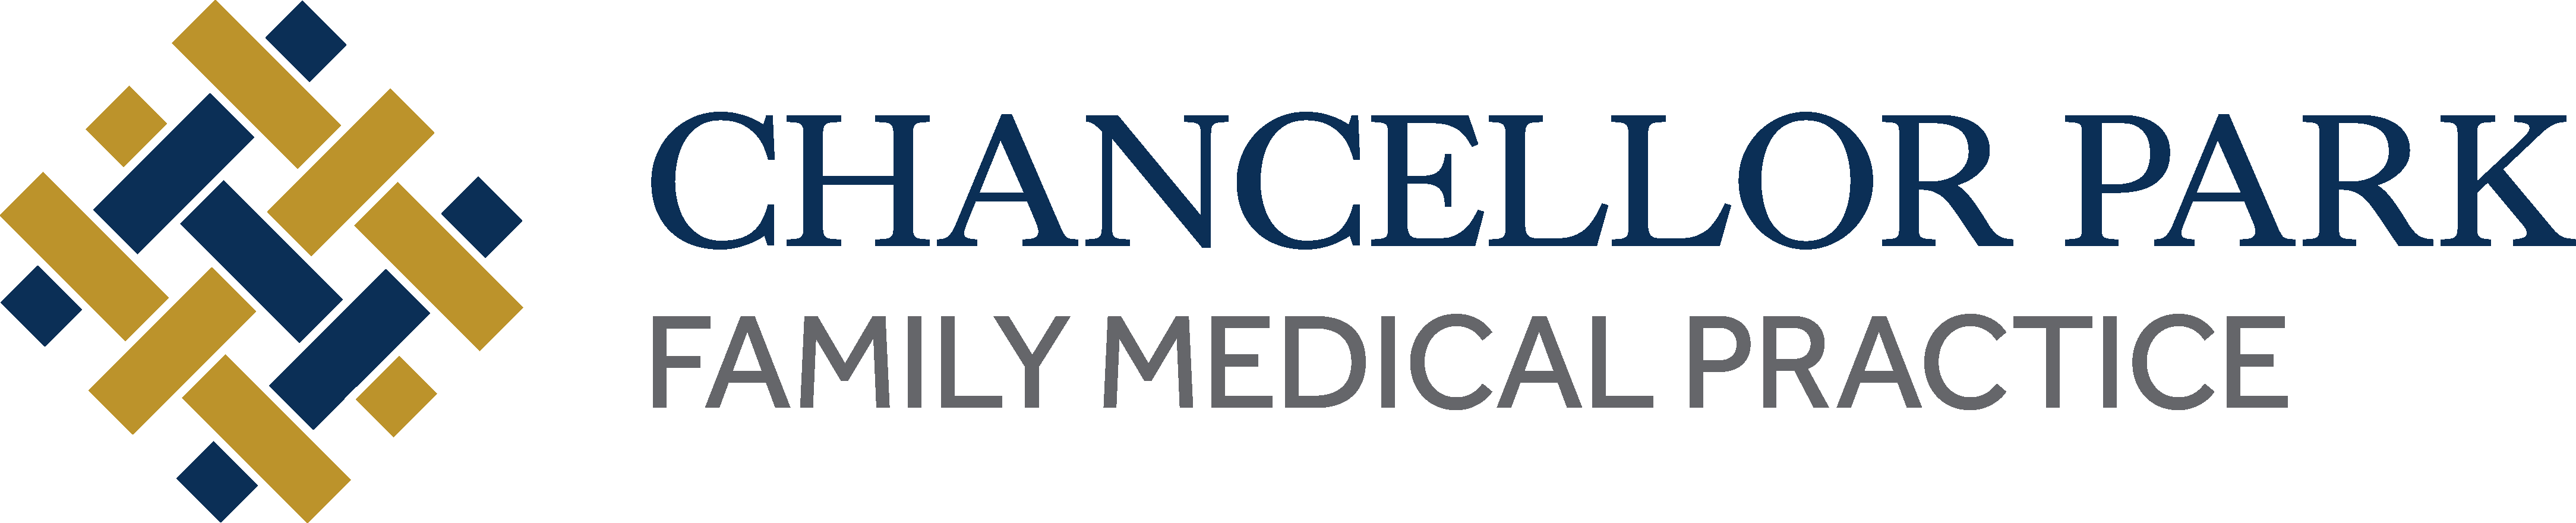 Chancellor Park Family Medical Practice